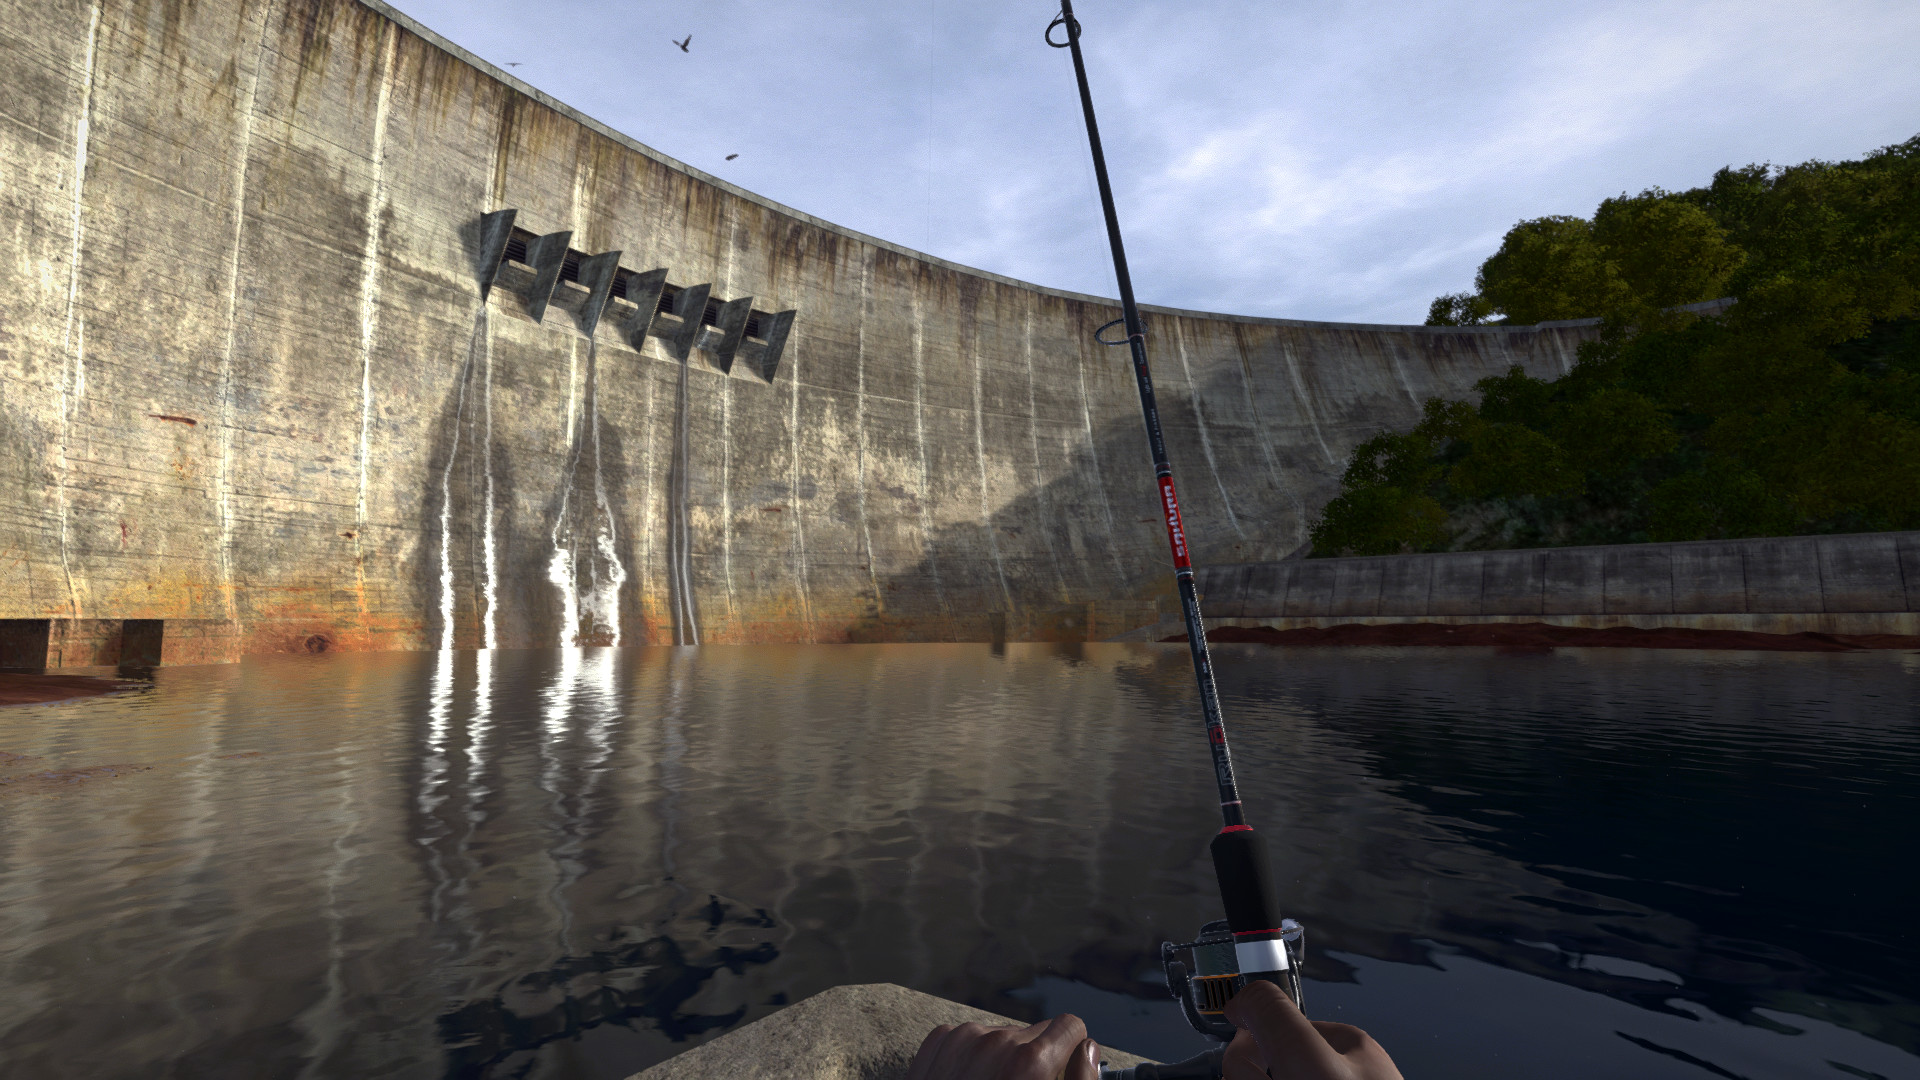 Ultimate Fishing Simulator - Kariba Dam DLC EU Steam CD Key